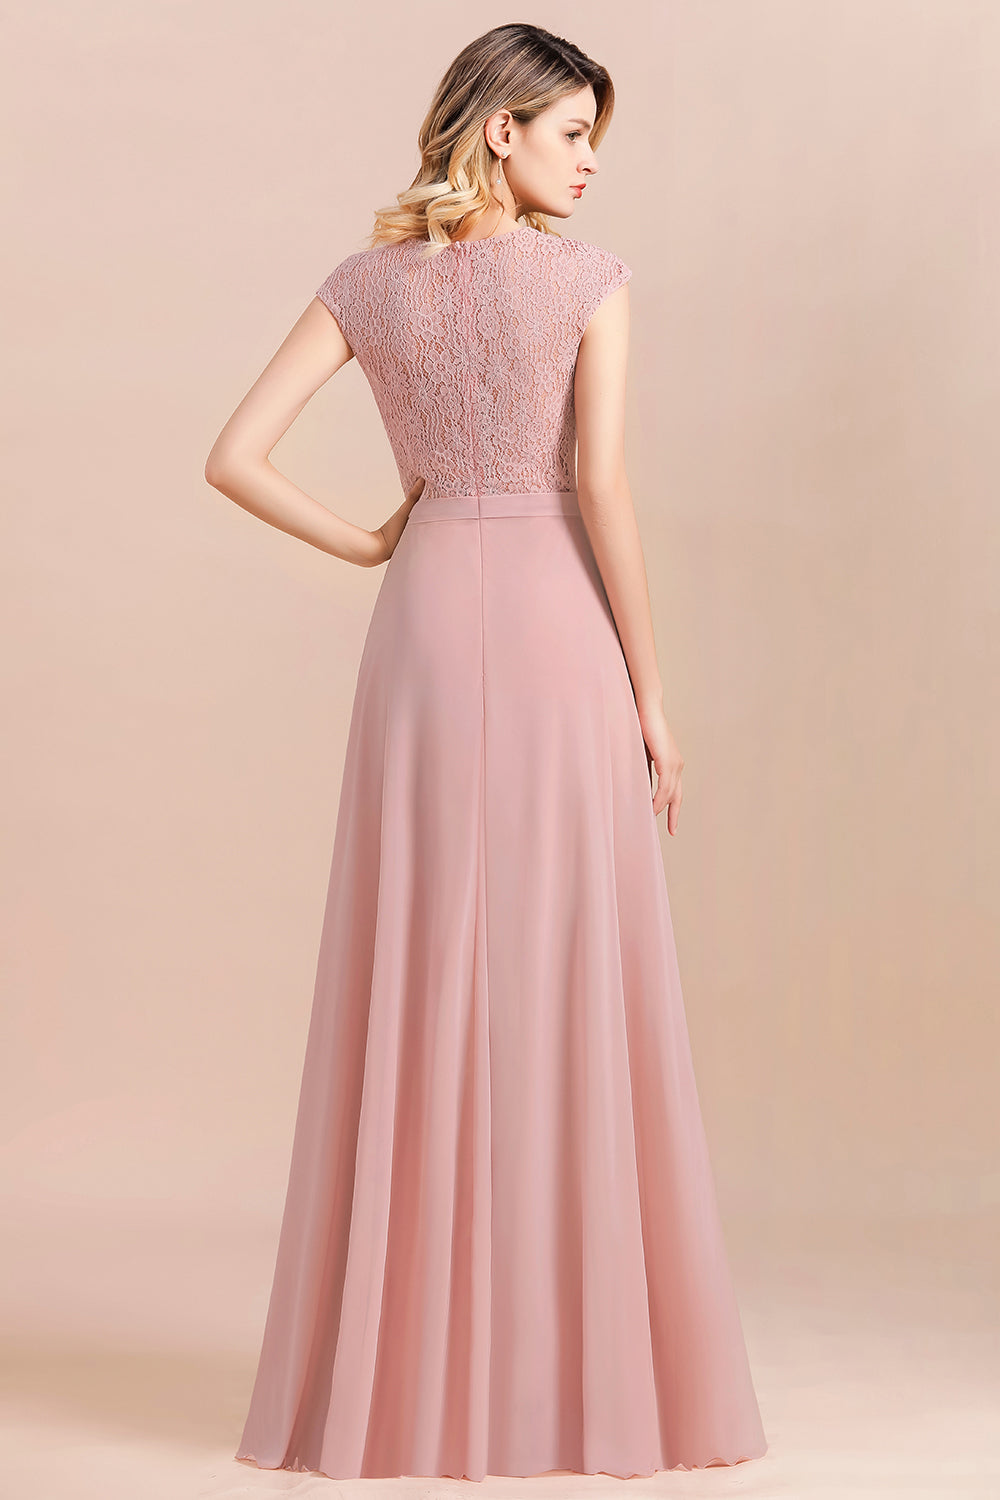 elegant a line sleeveless dusty rose lace bridesmaid dresses 2